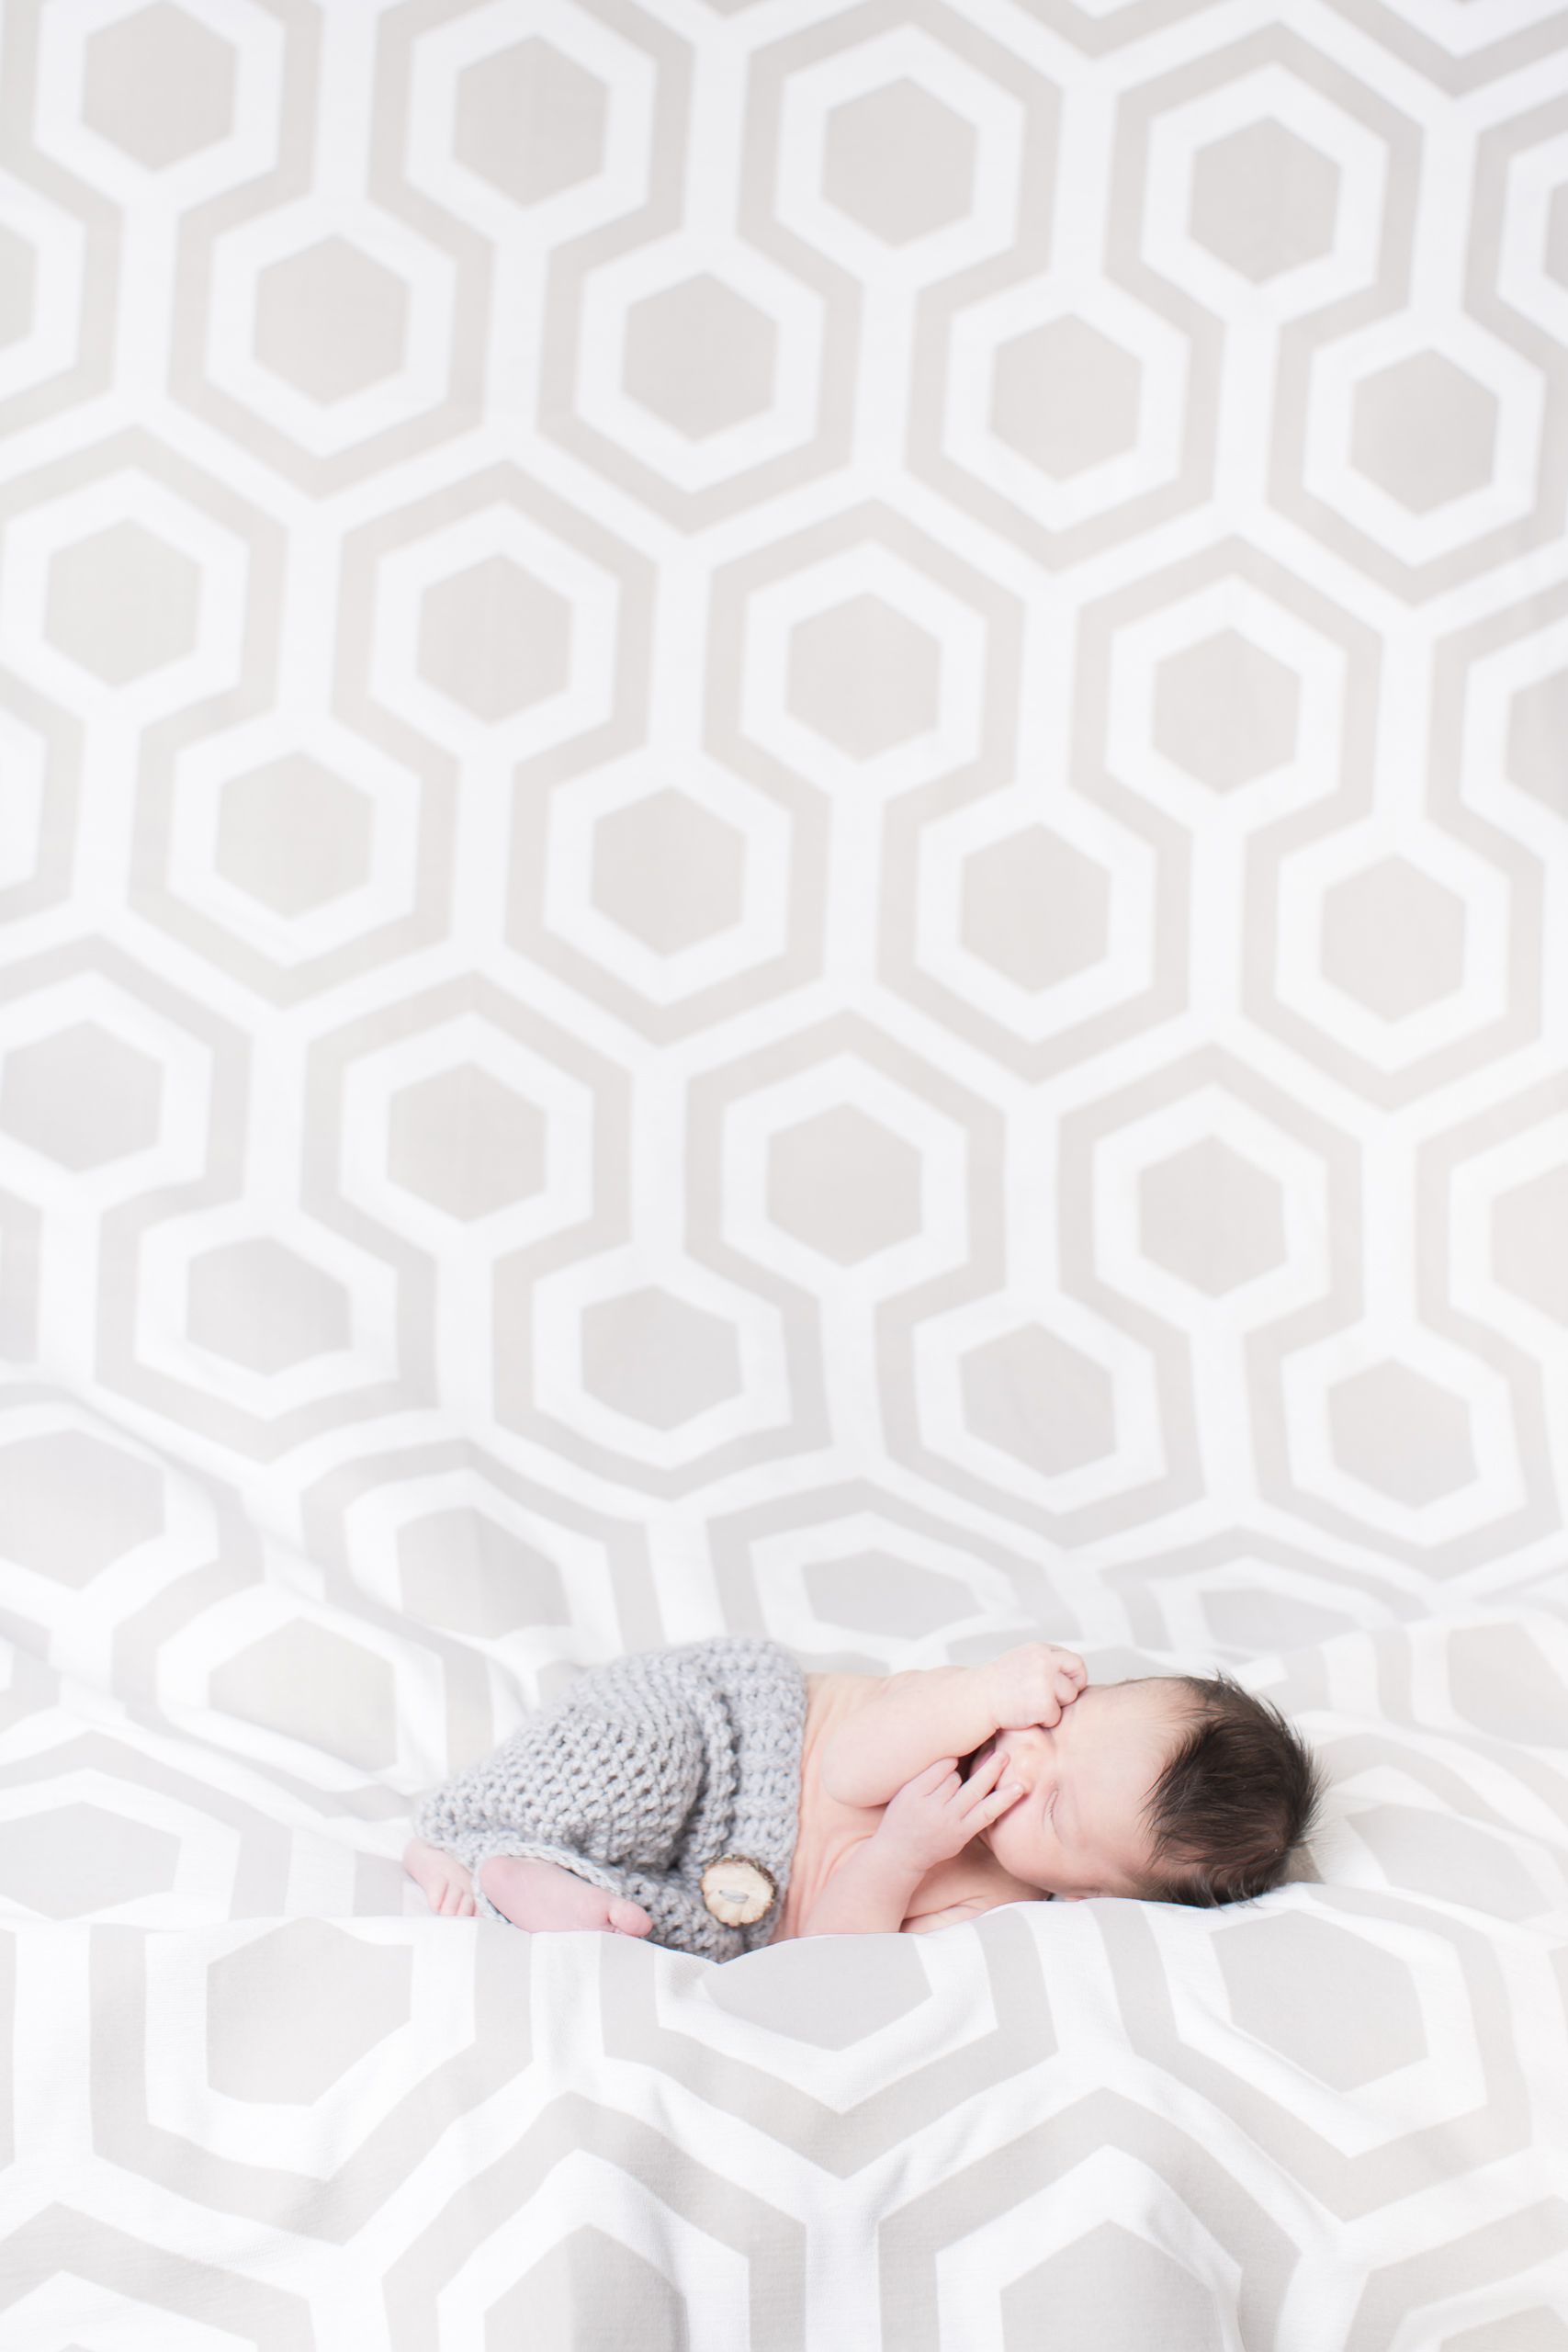 06 modern newborn baby boy in kint bottoms modern hexagon backdrop studio photography session.jpg